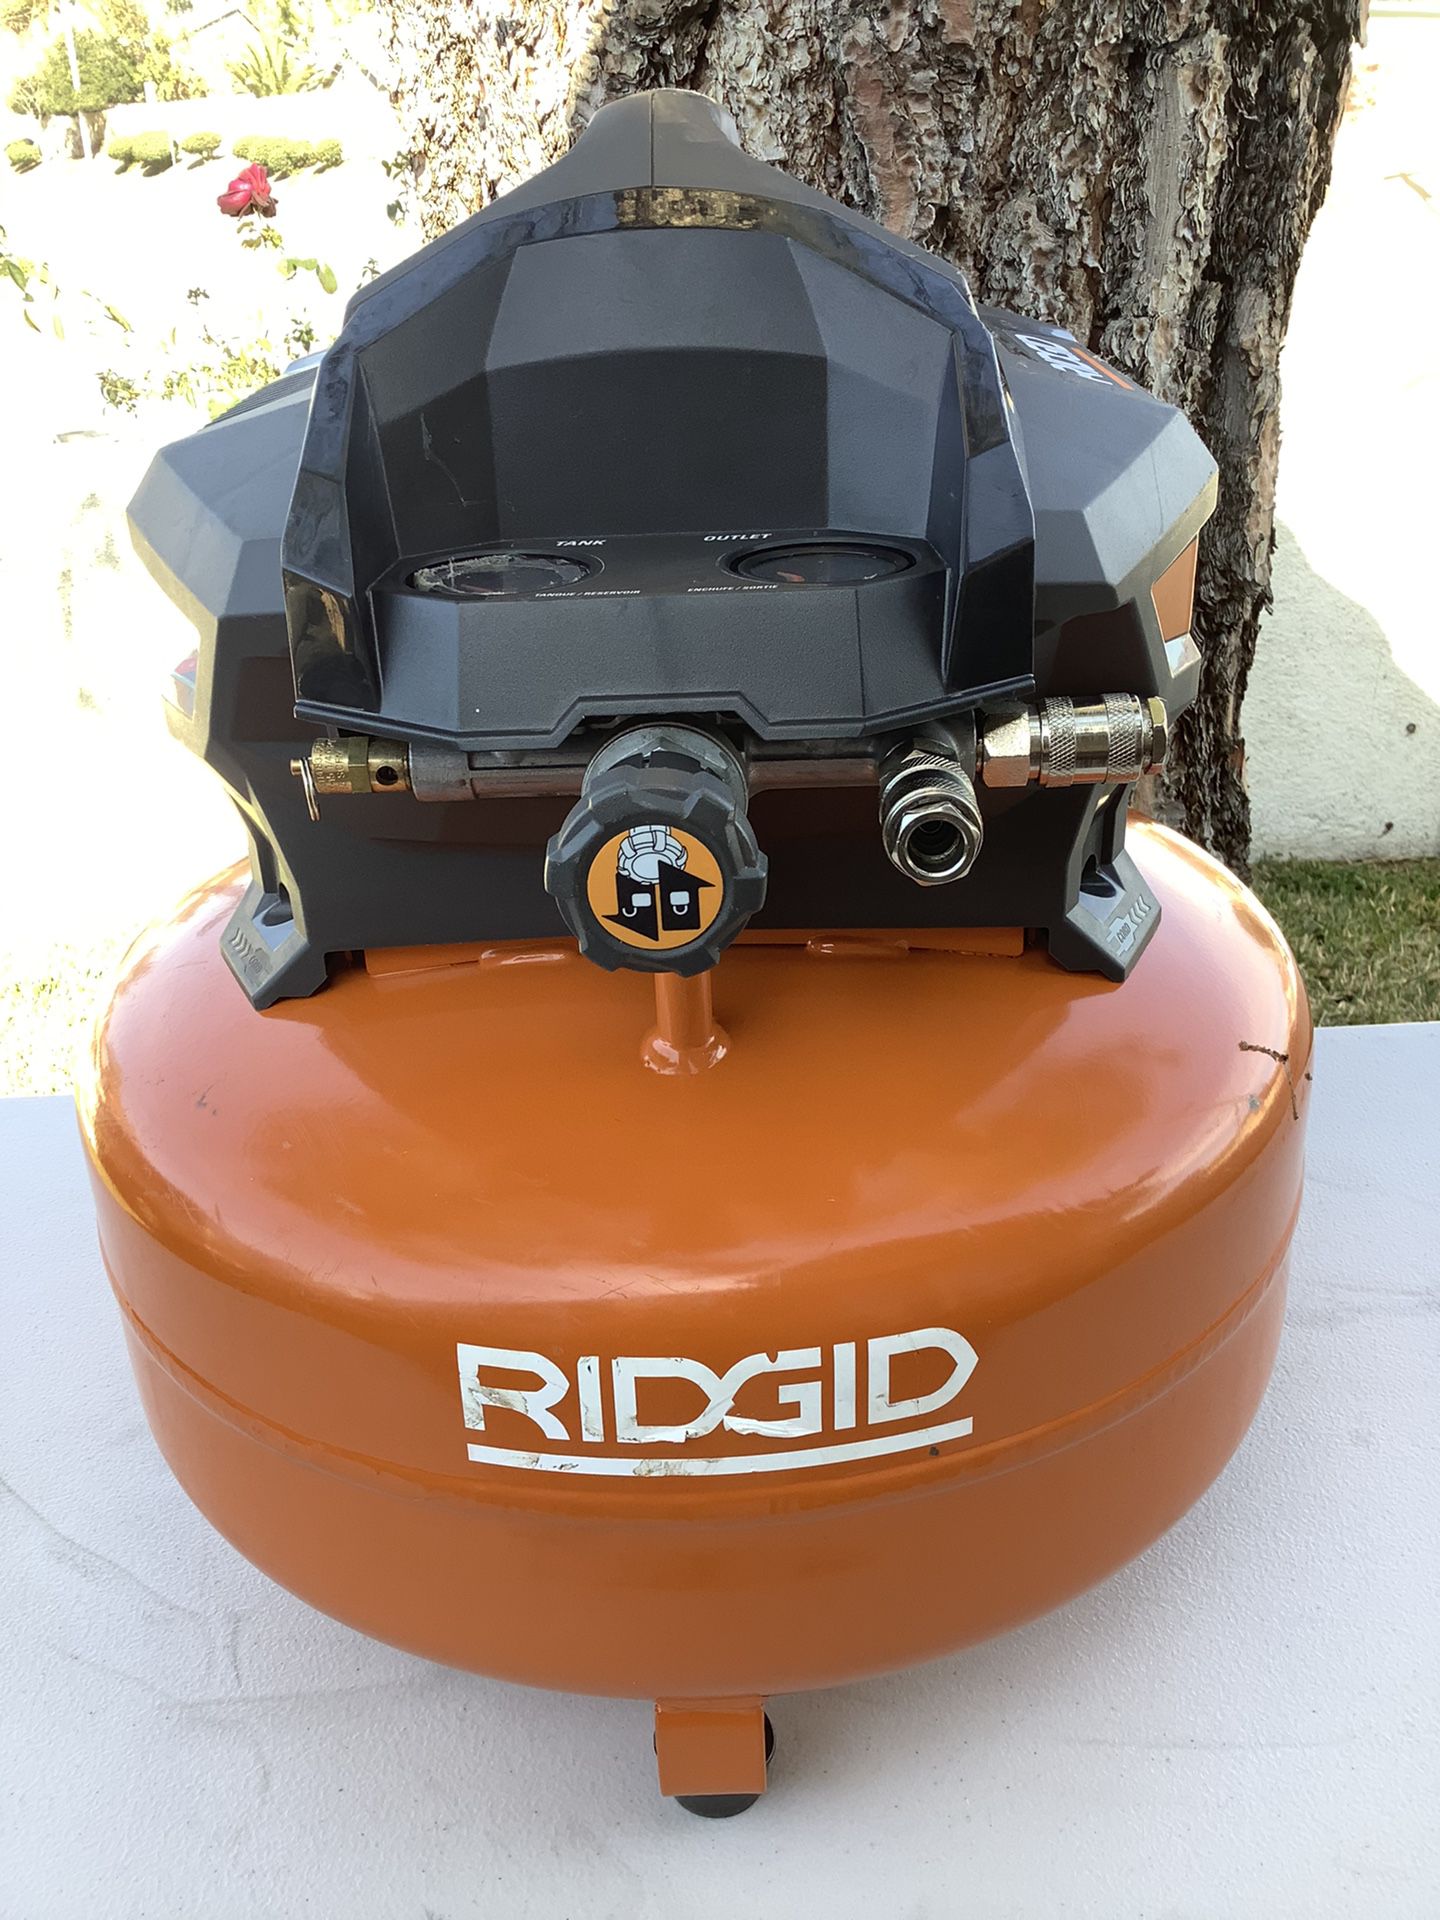 RIDGID 6 Gal. Portable Electric Pancake Air Compressor